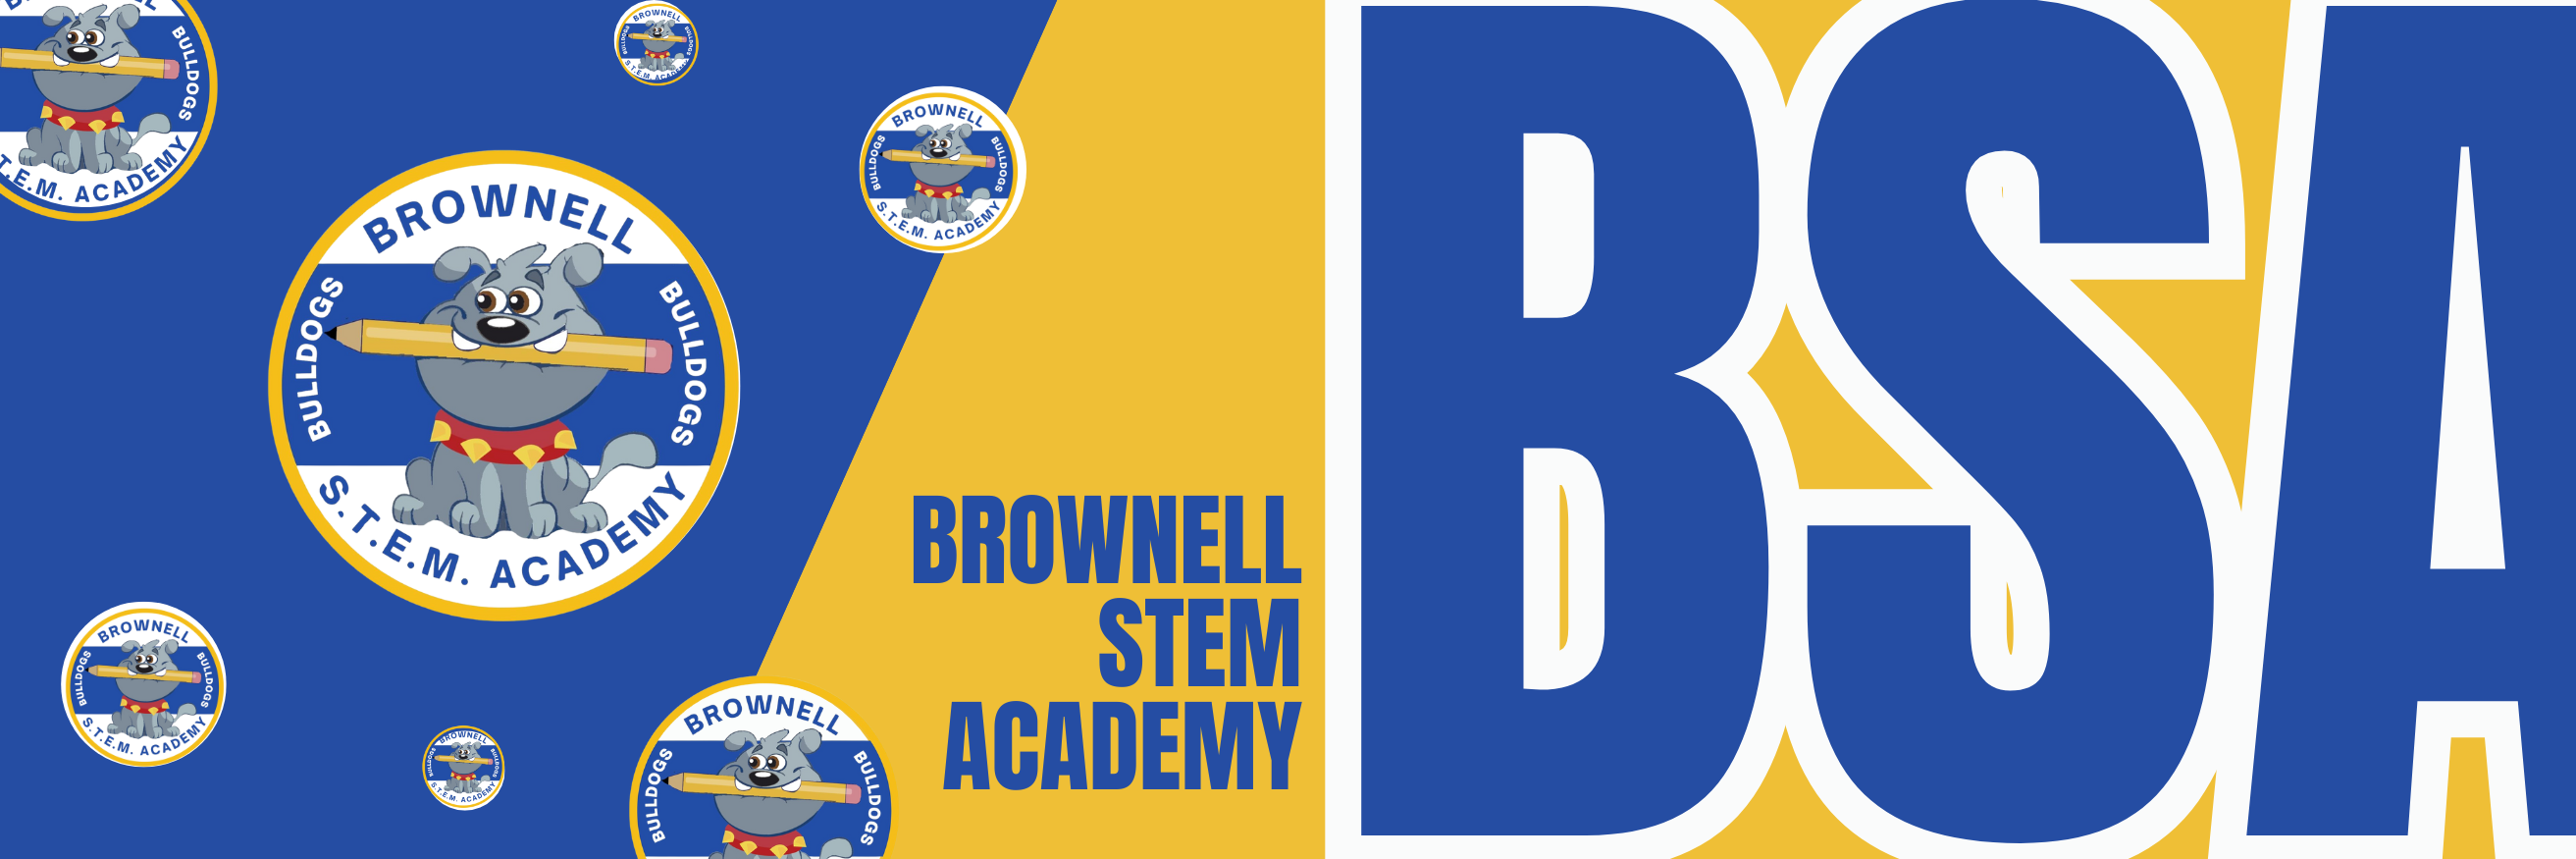 Brownell STEM Academy 